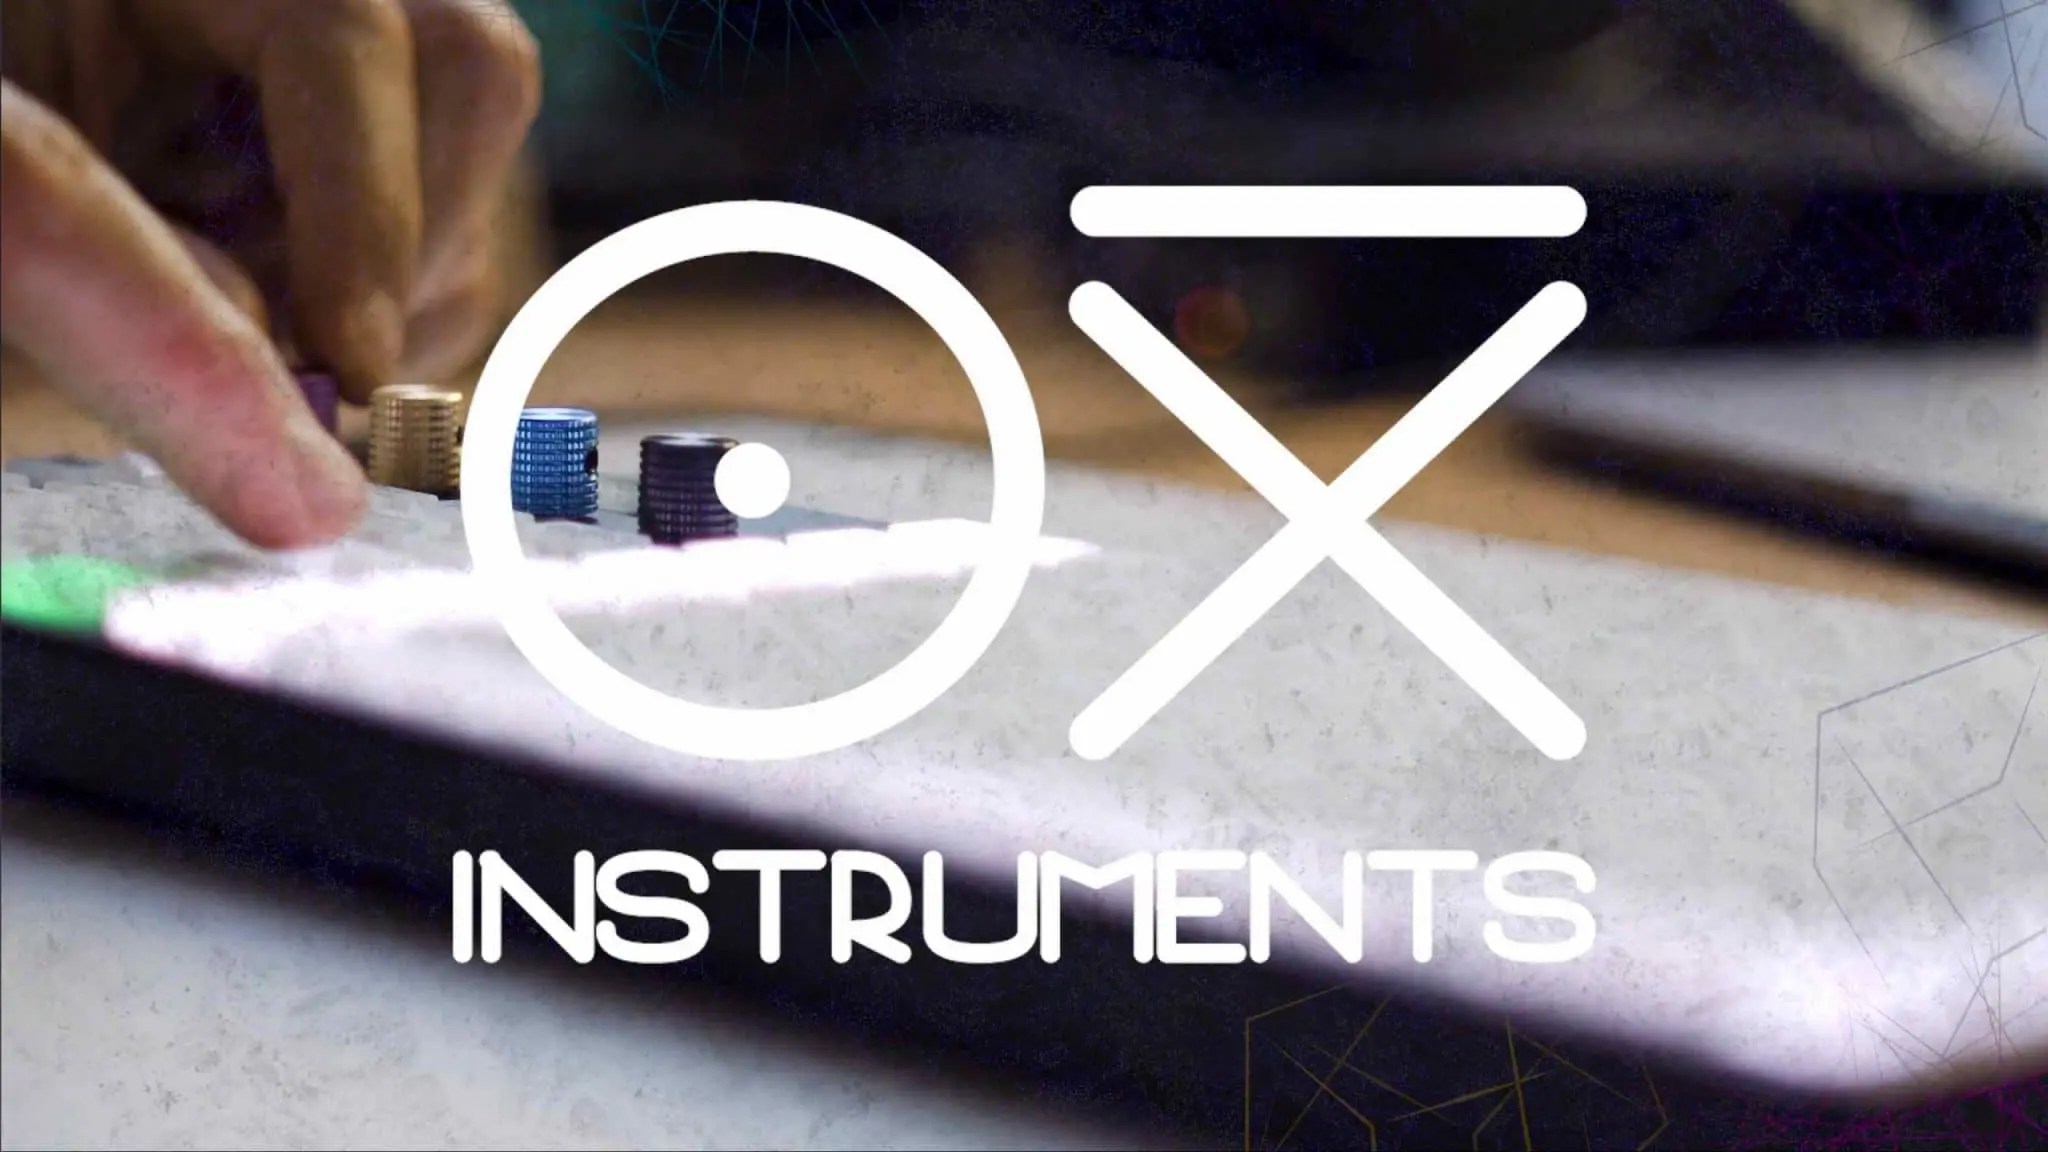 oxiinstruments.com